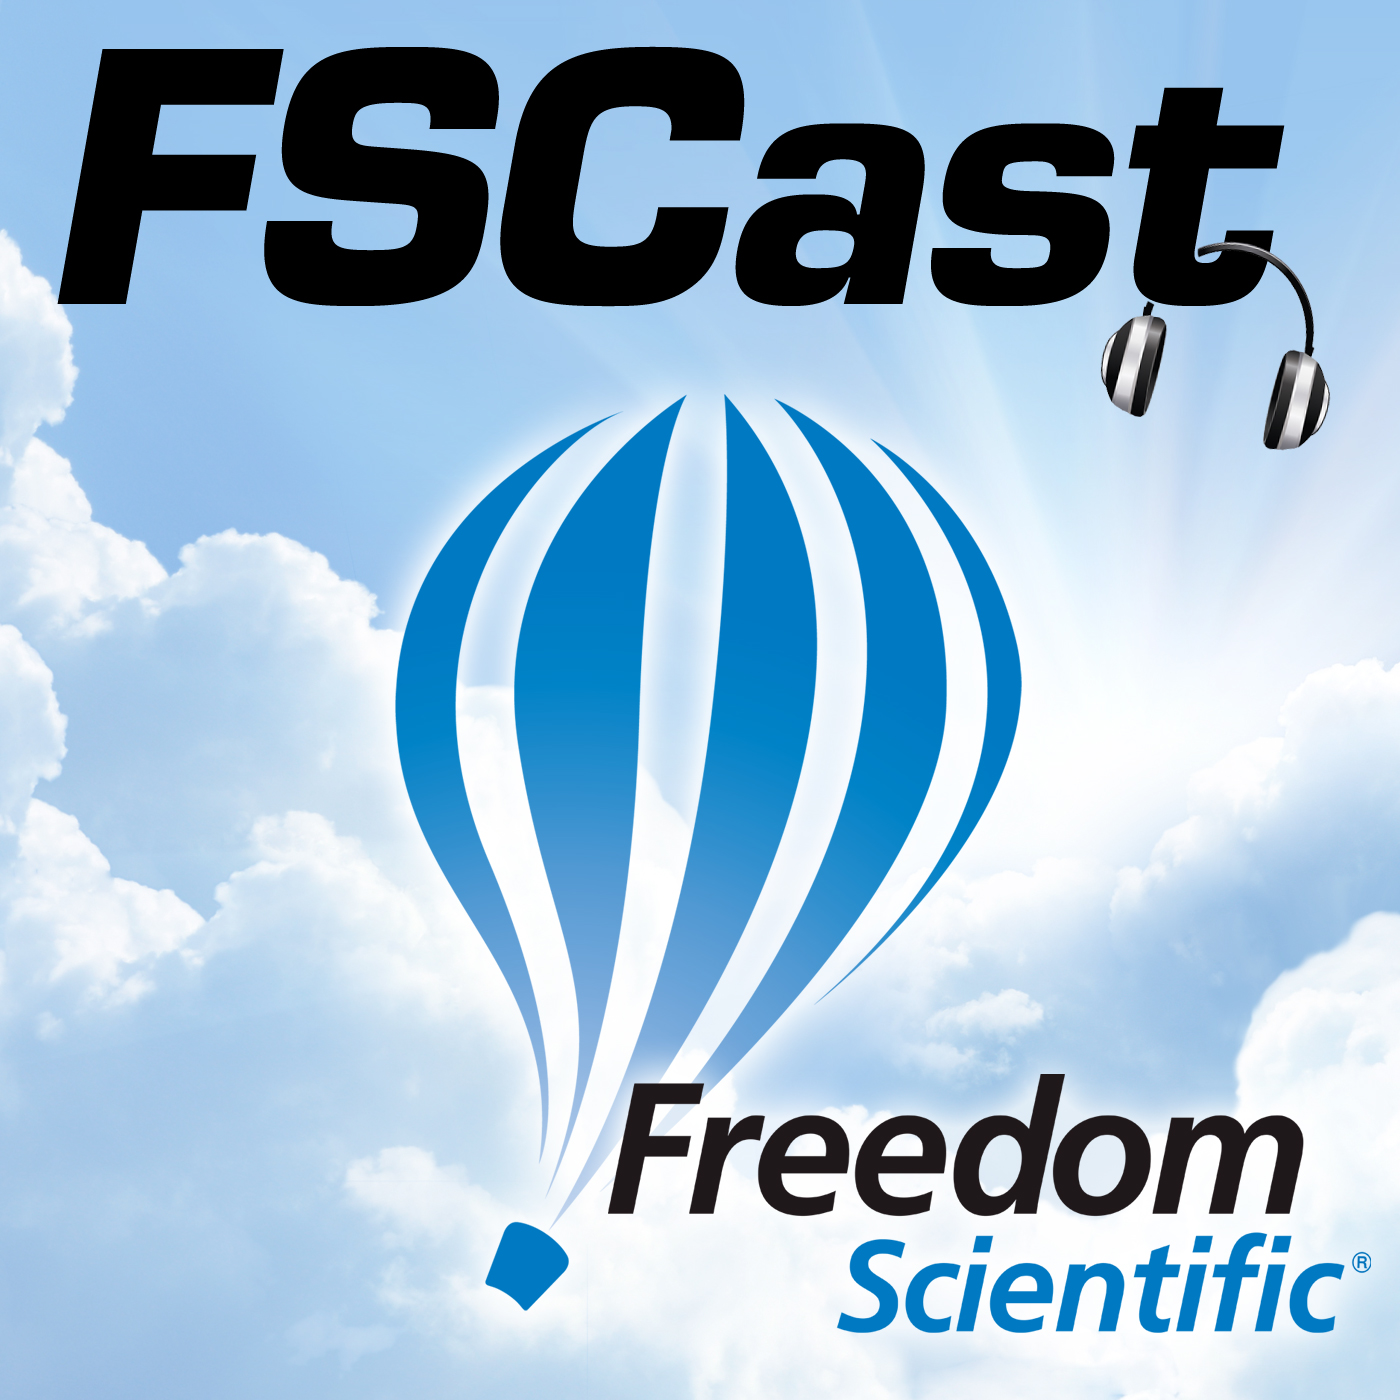 Freedom Scientific FSCast logo